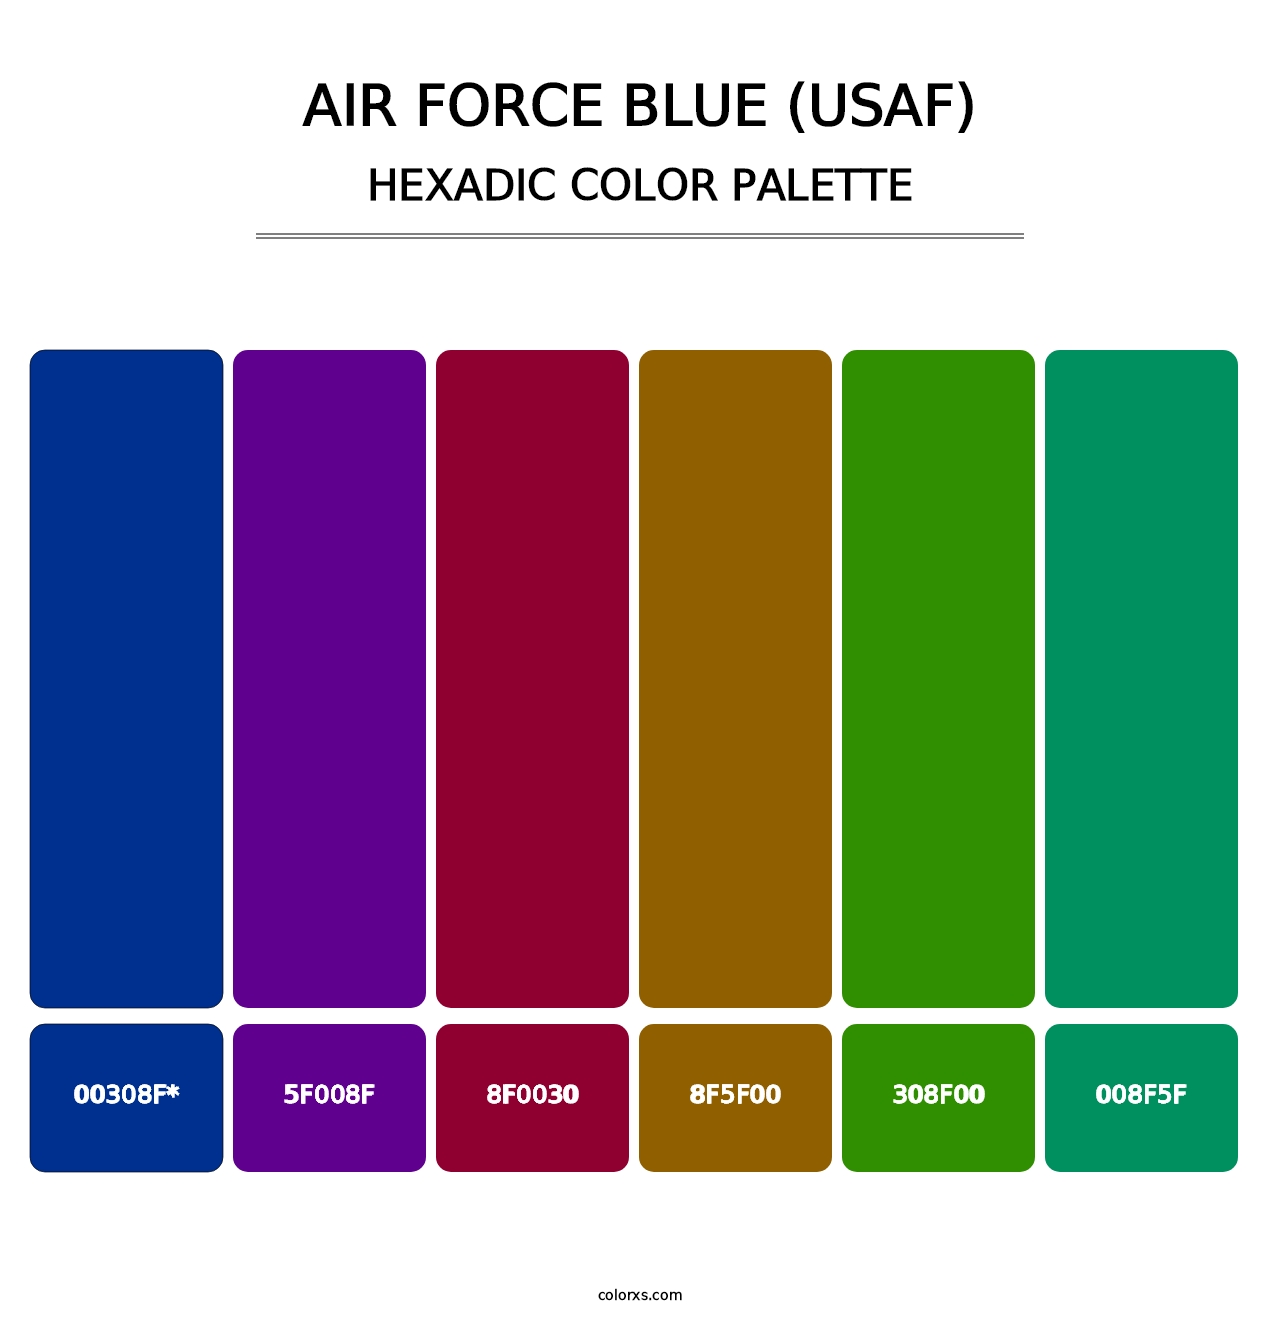 Air Force Blue (USAF) - Hexadic Color Palette